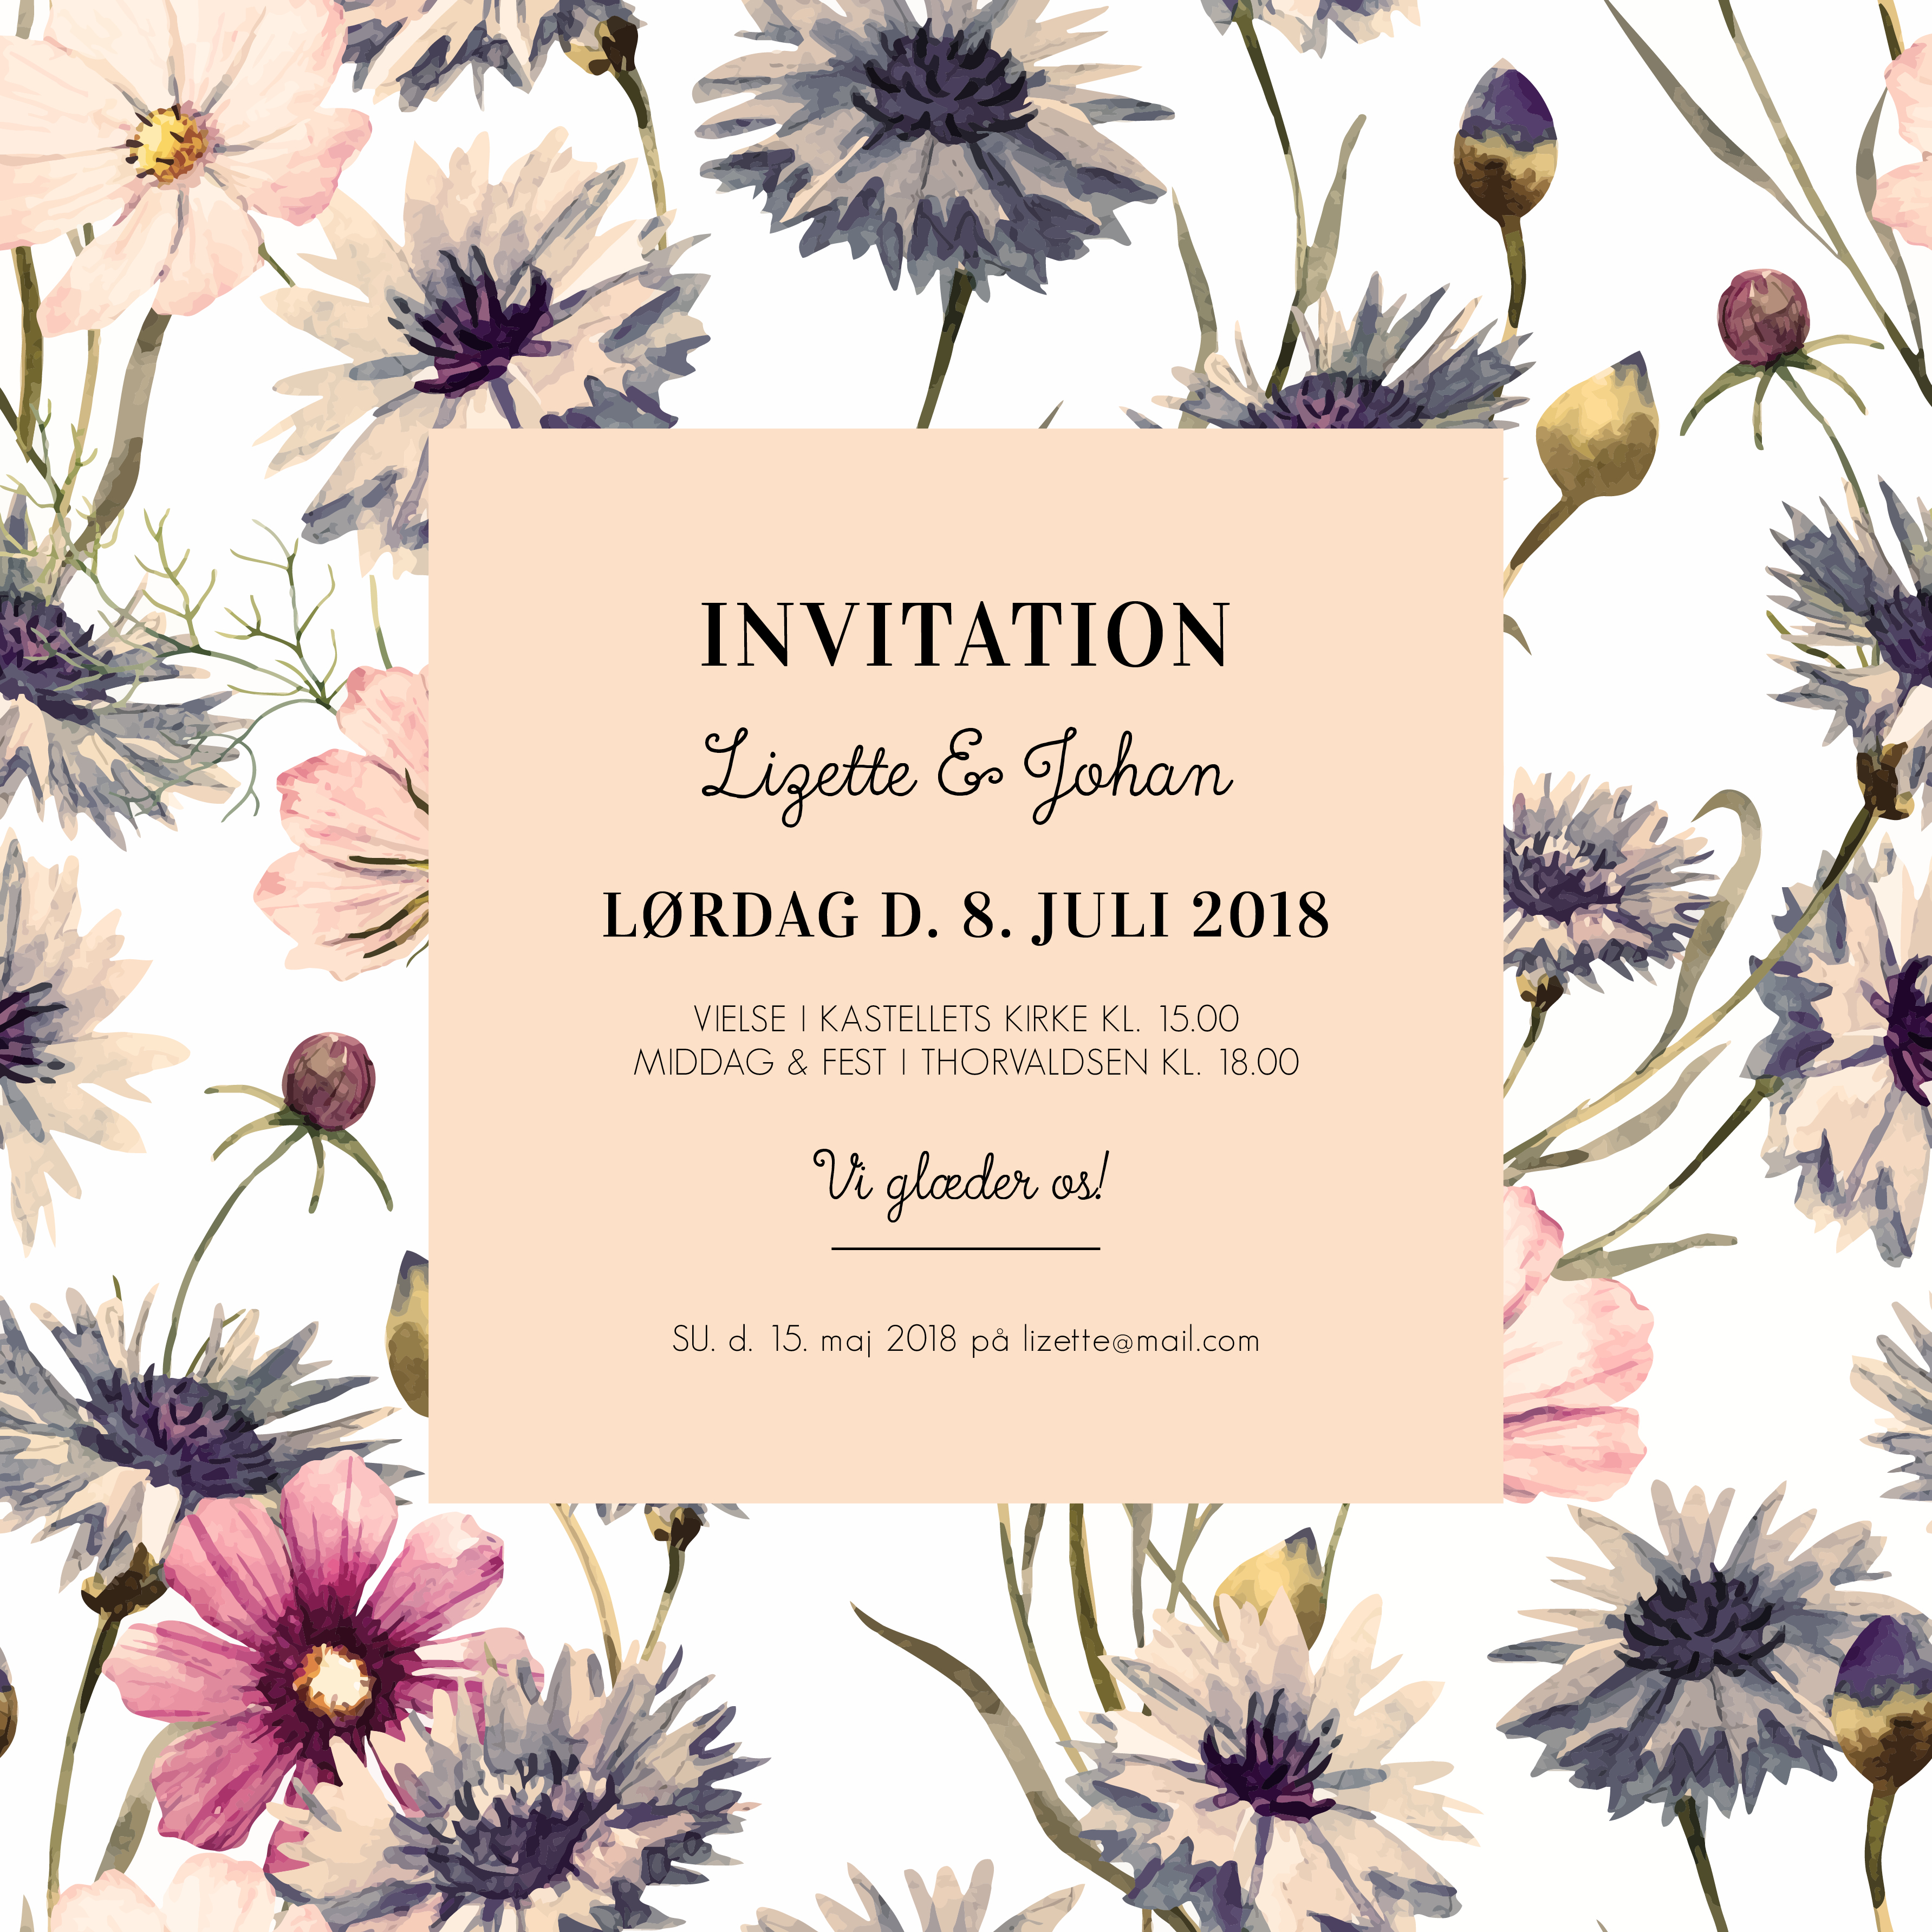 Invitationer - Lizette & Johan